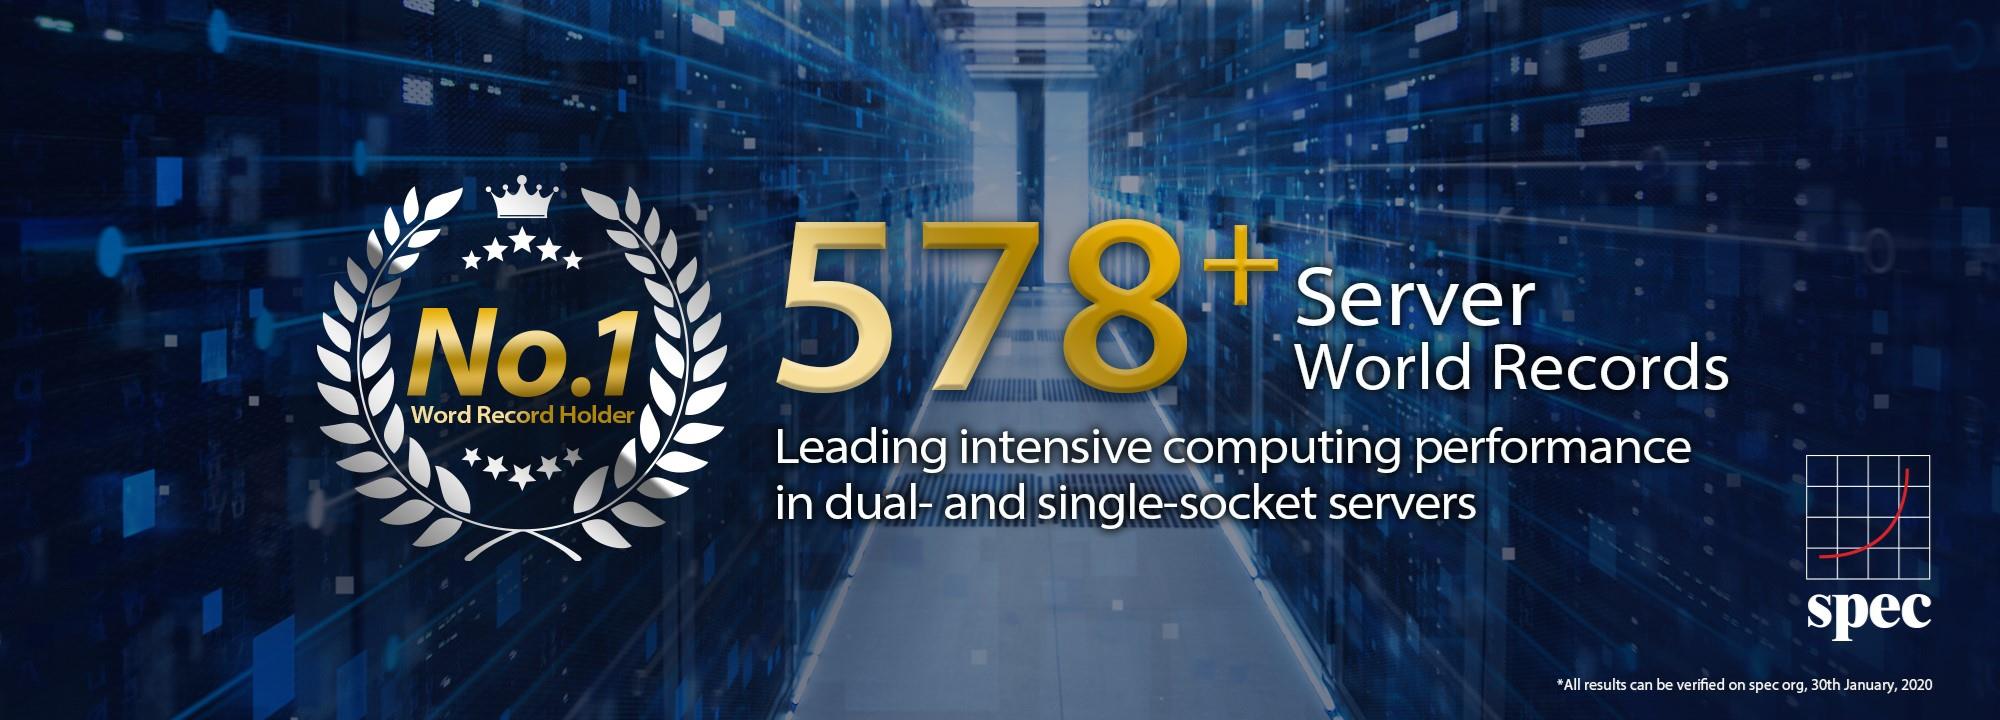 ASUS sets over 578 Server World Records